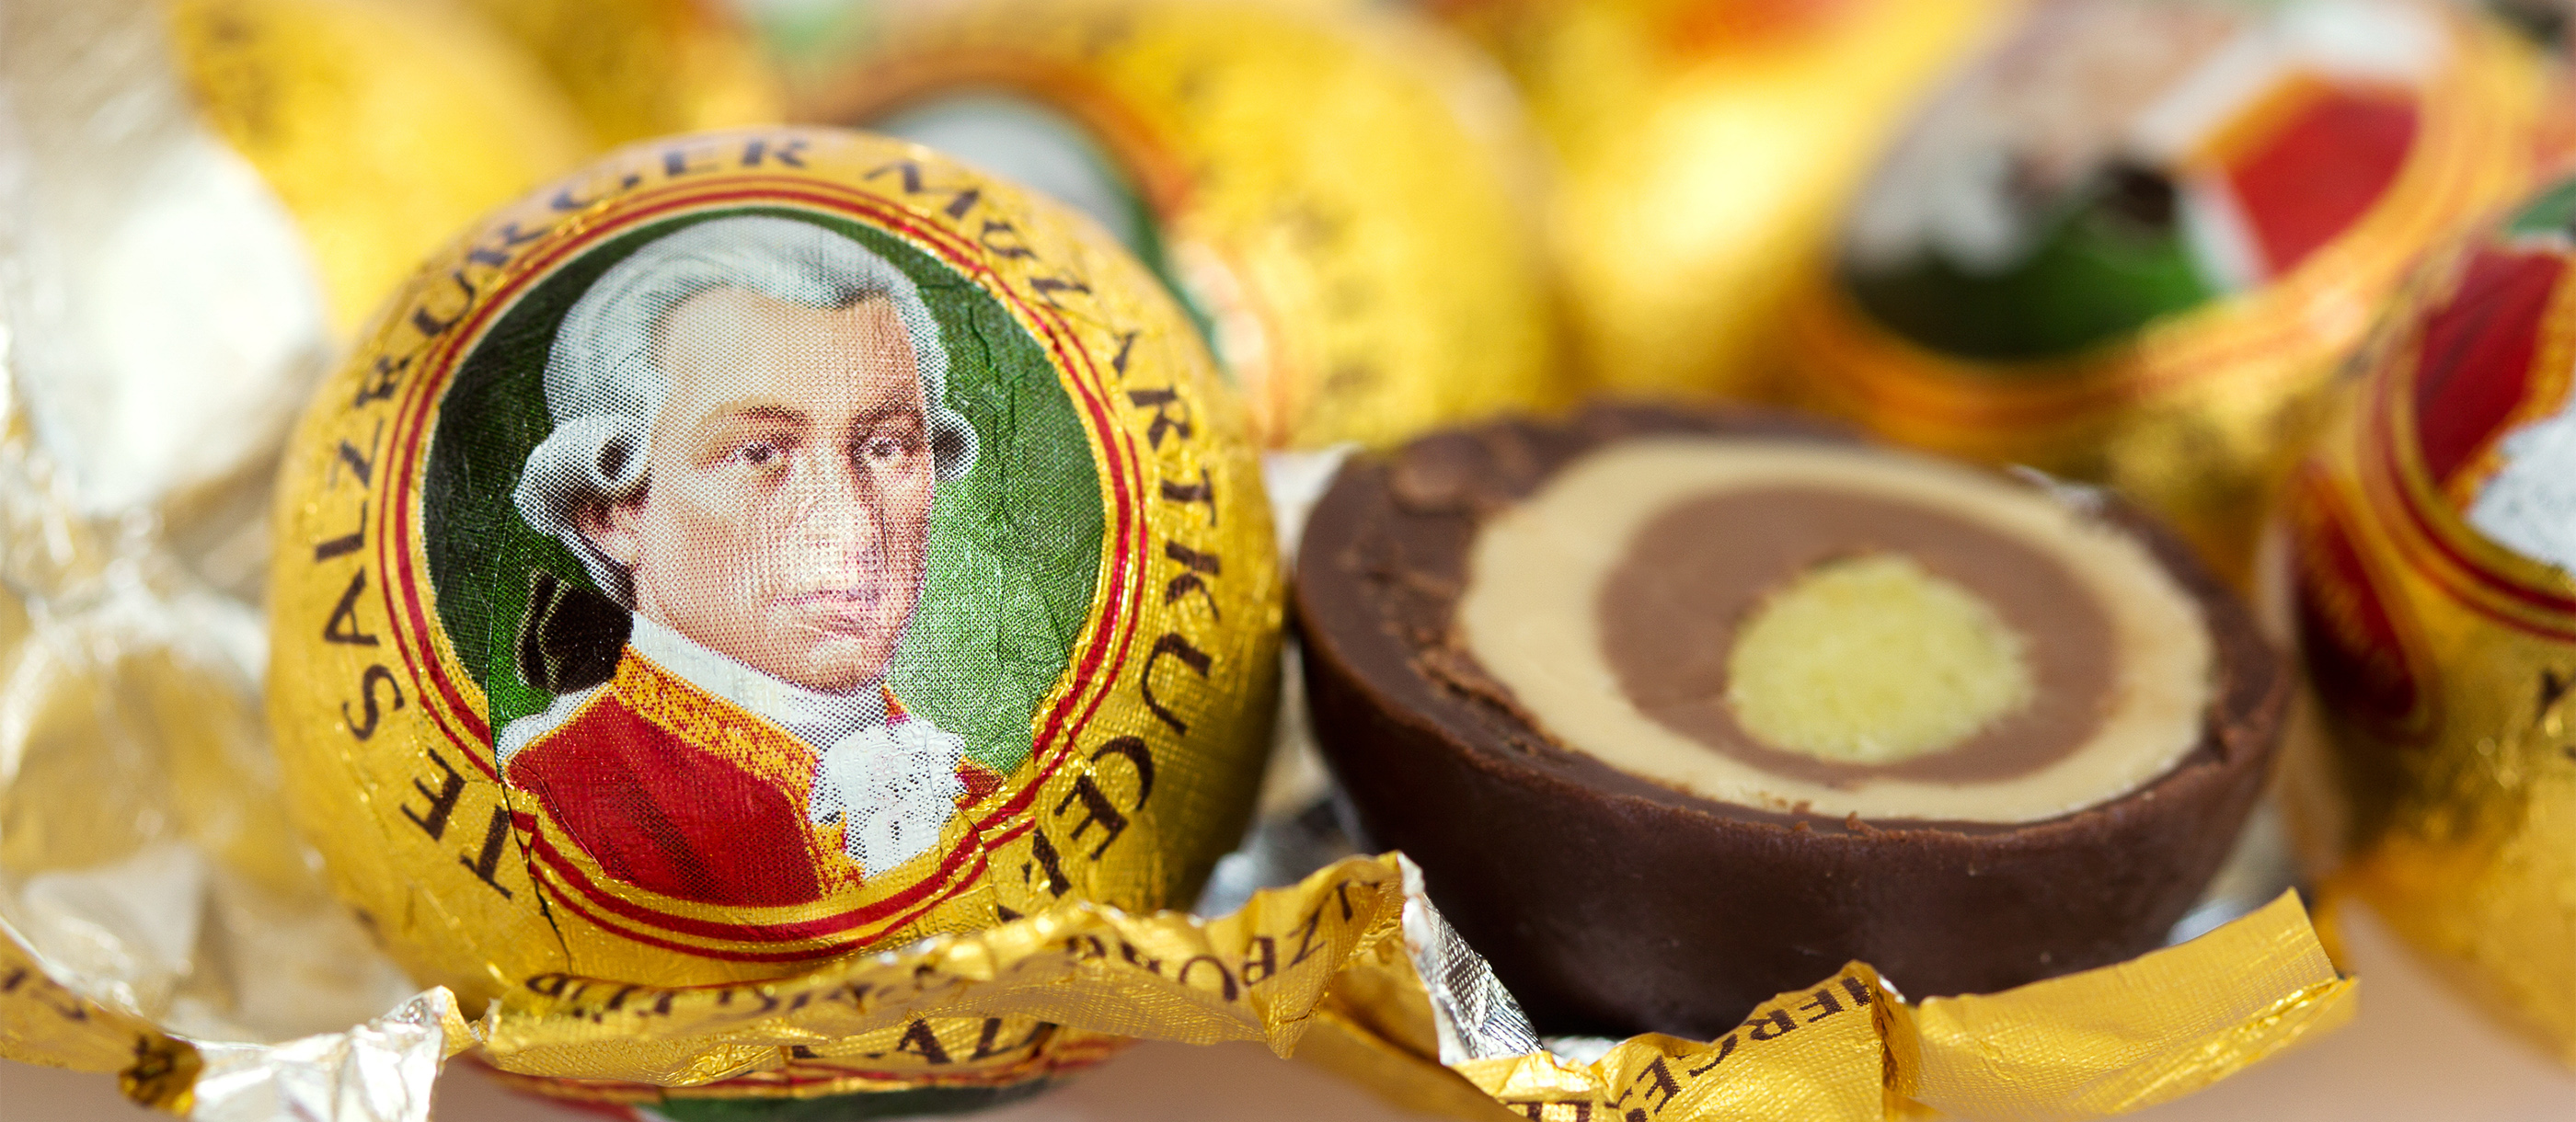 Austrian Chocolate